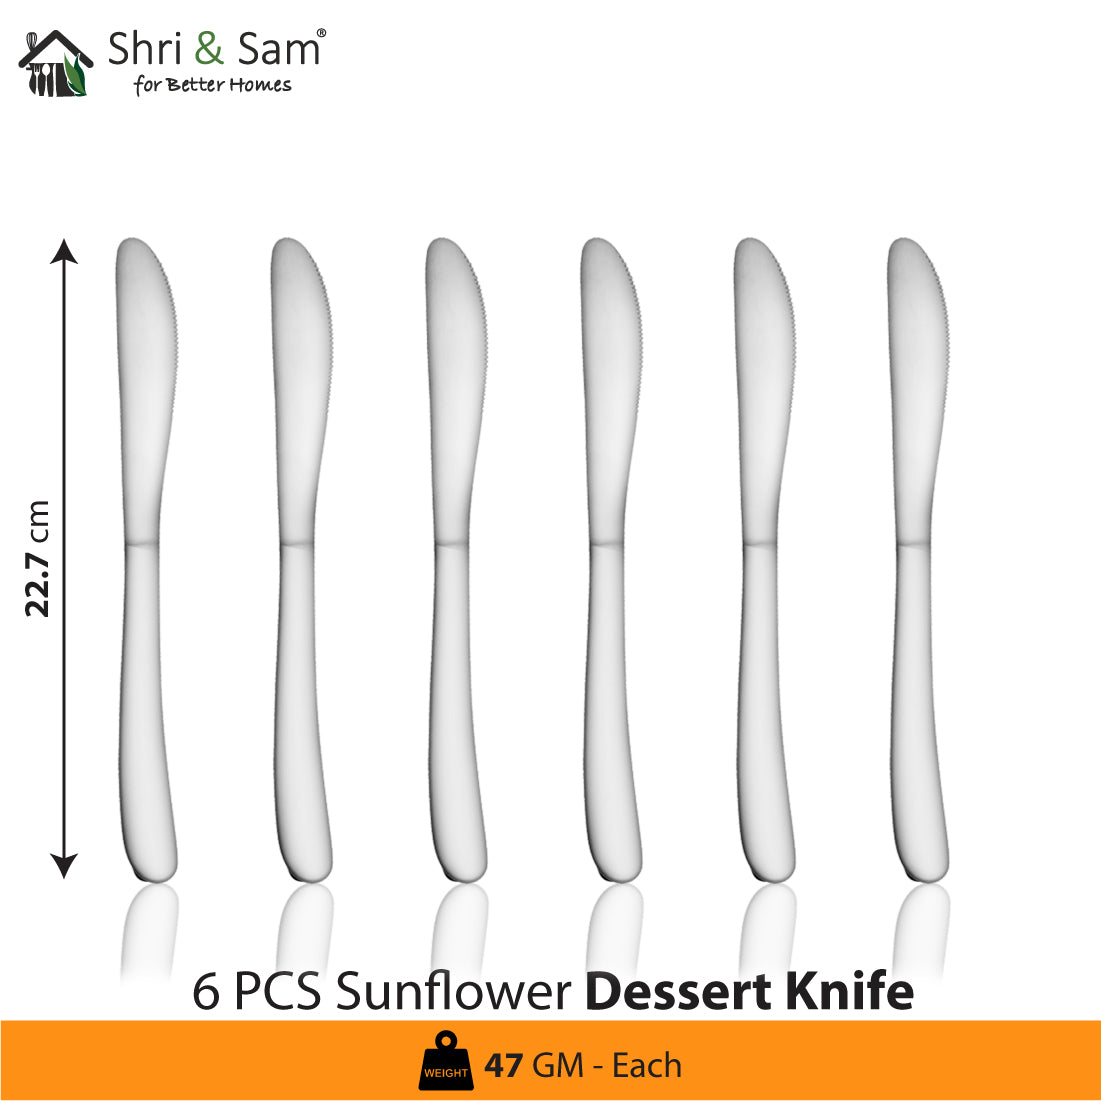 Stainless Steel 18 PCS Cutlery Set Sunflower